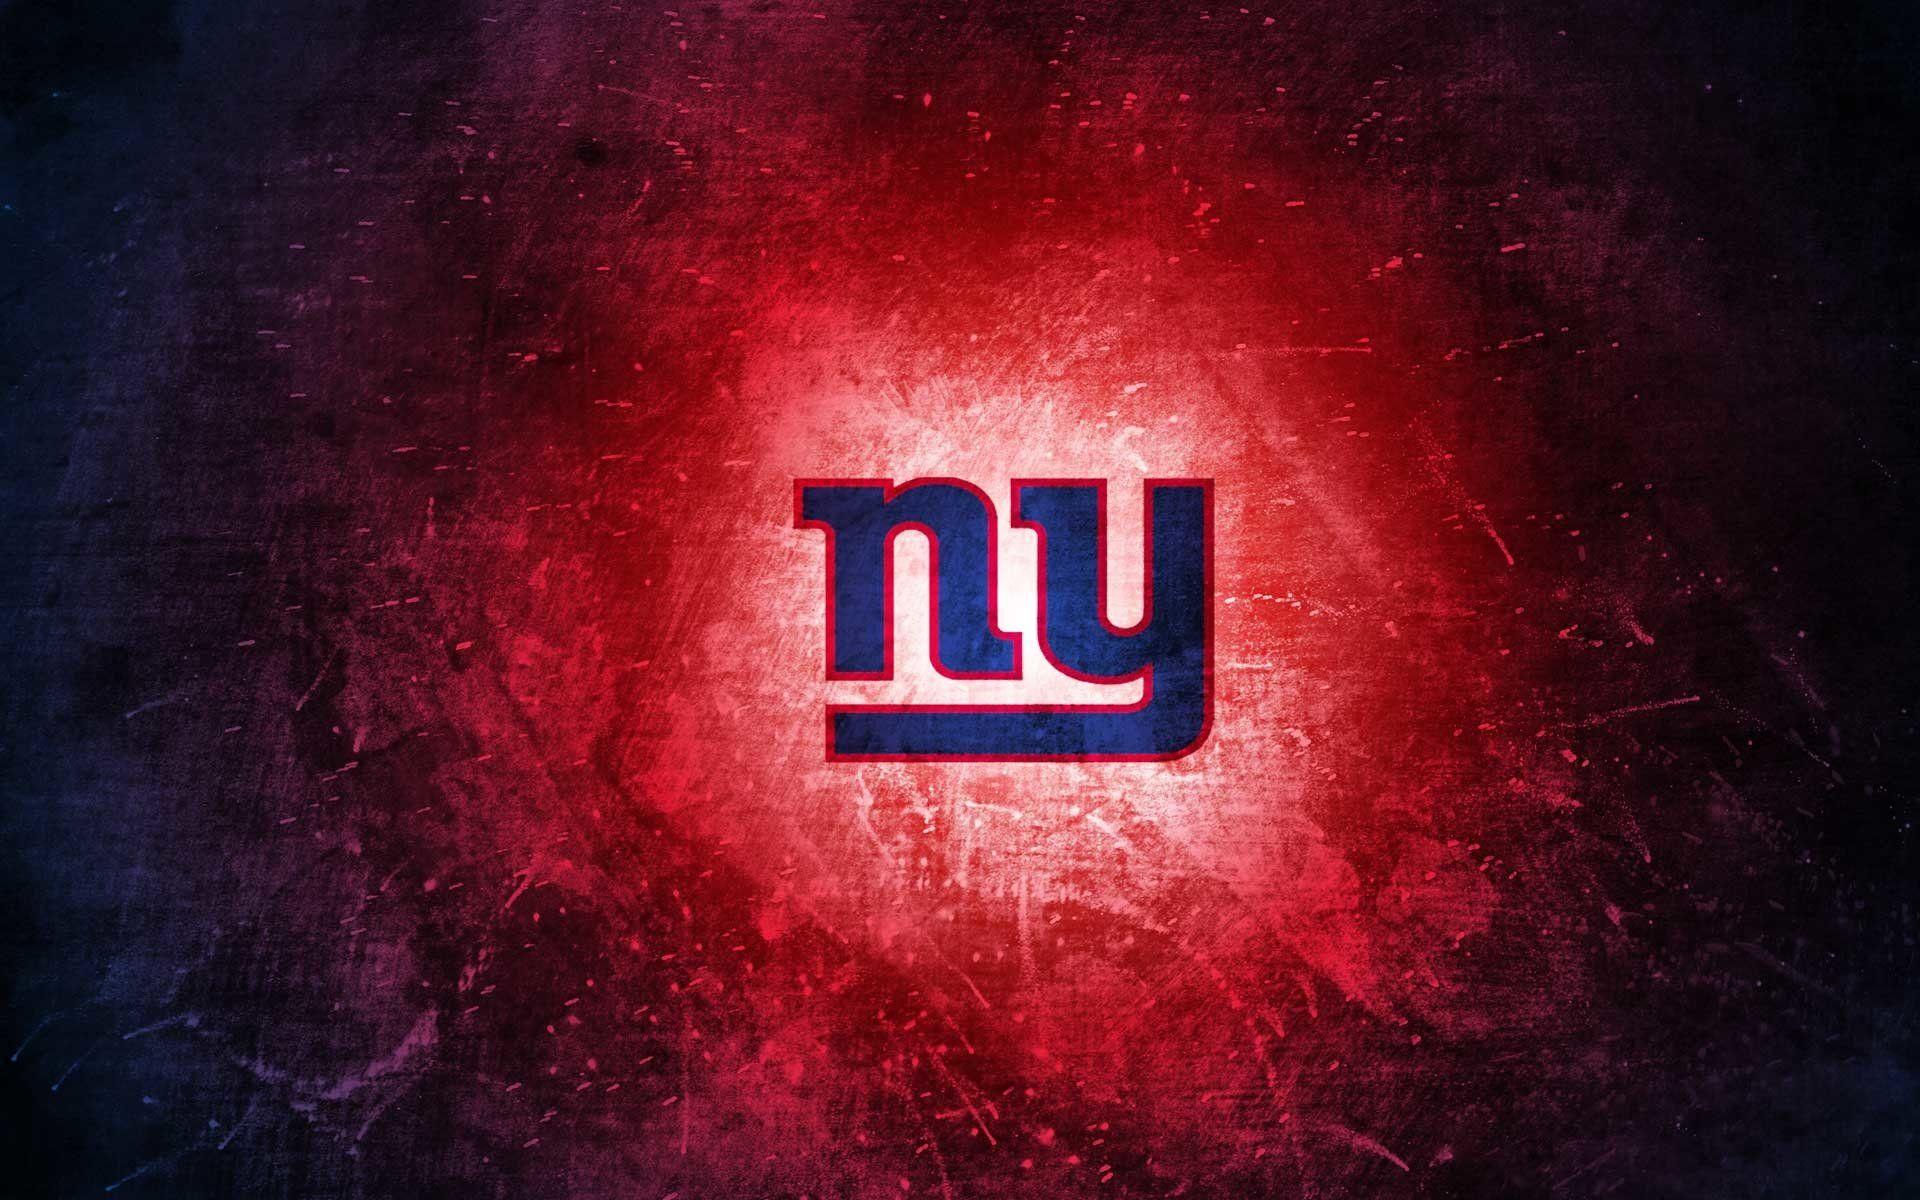 New York Giants HD Wallpaper